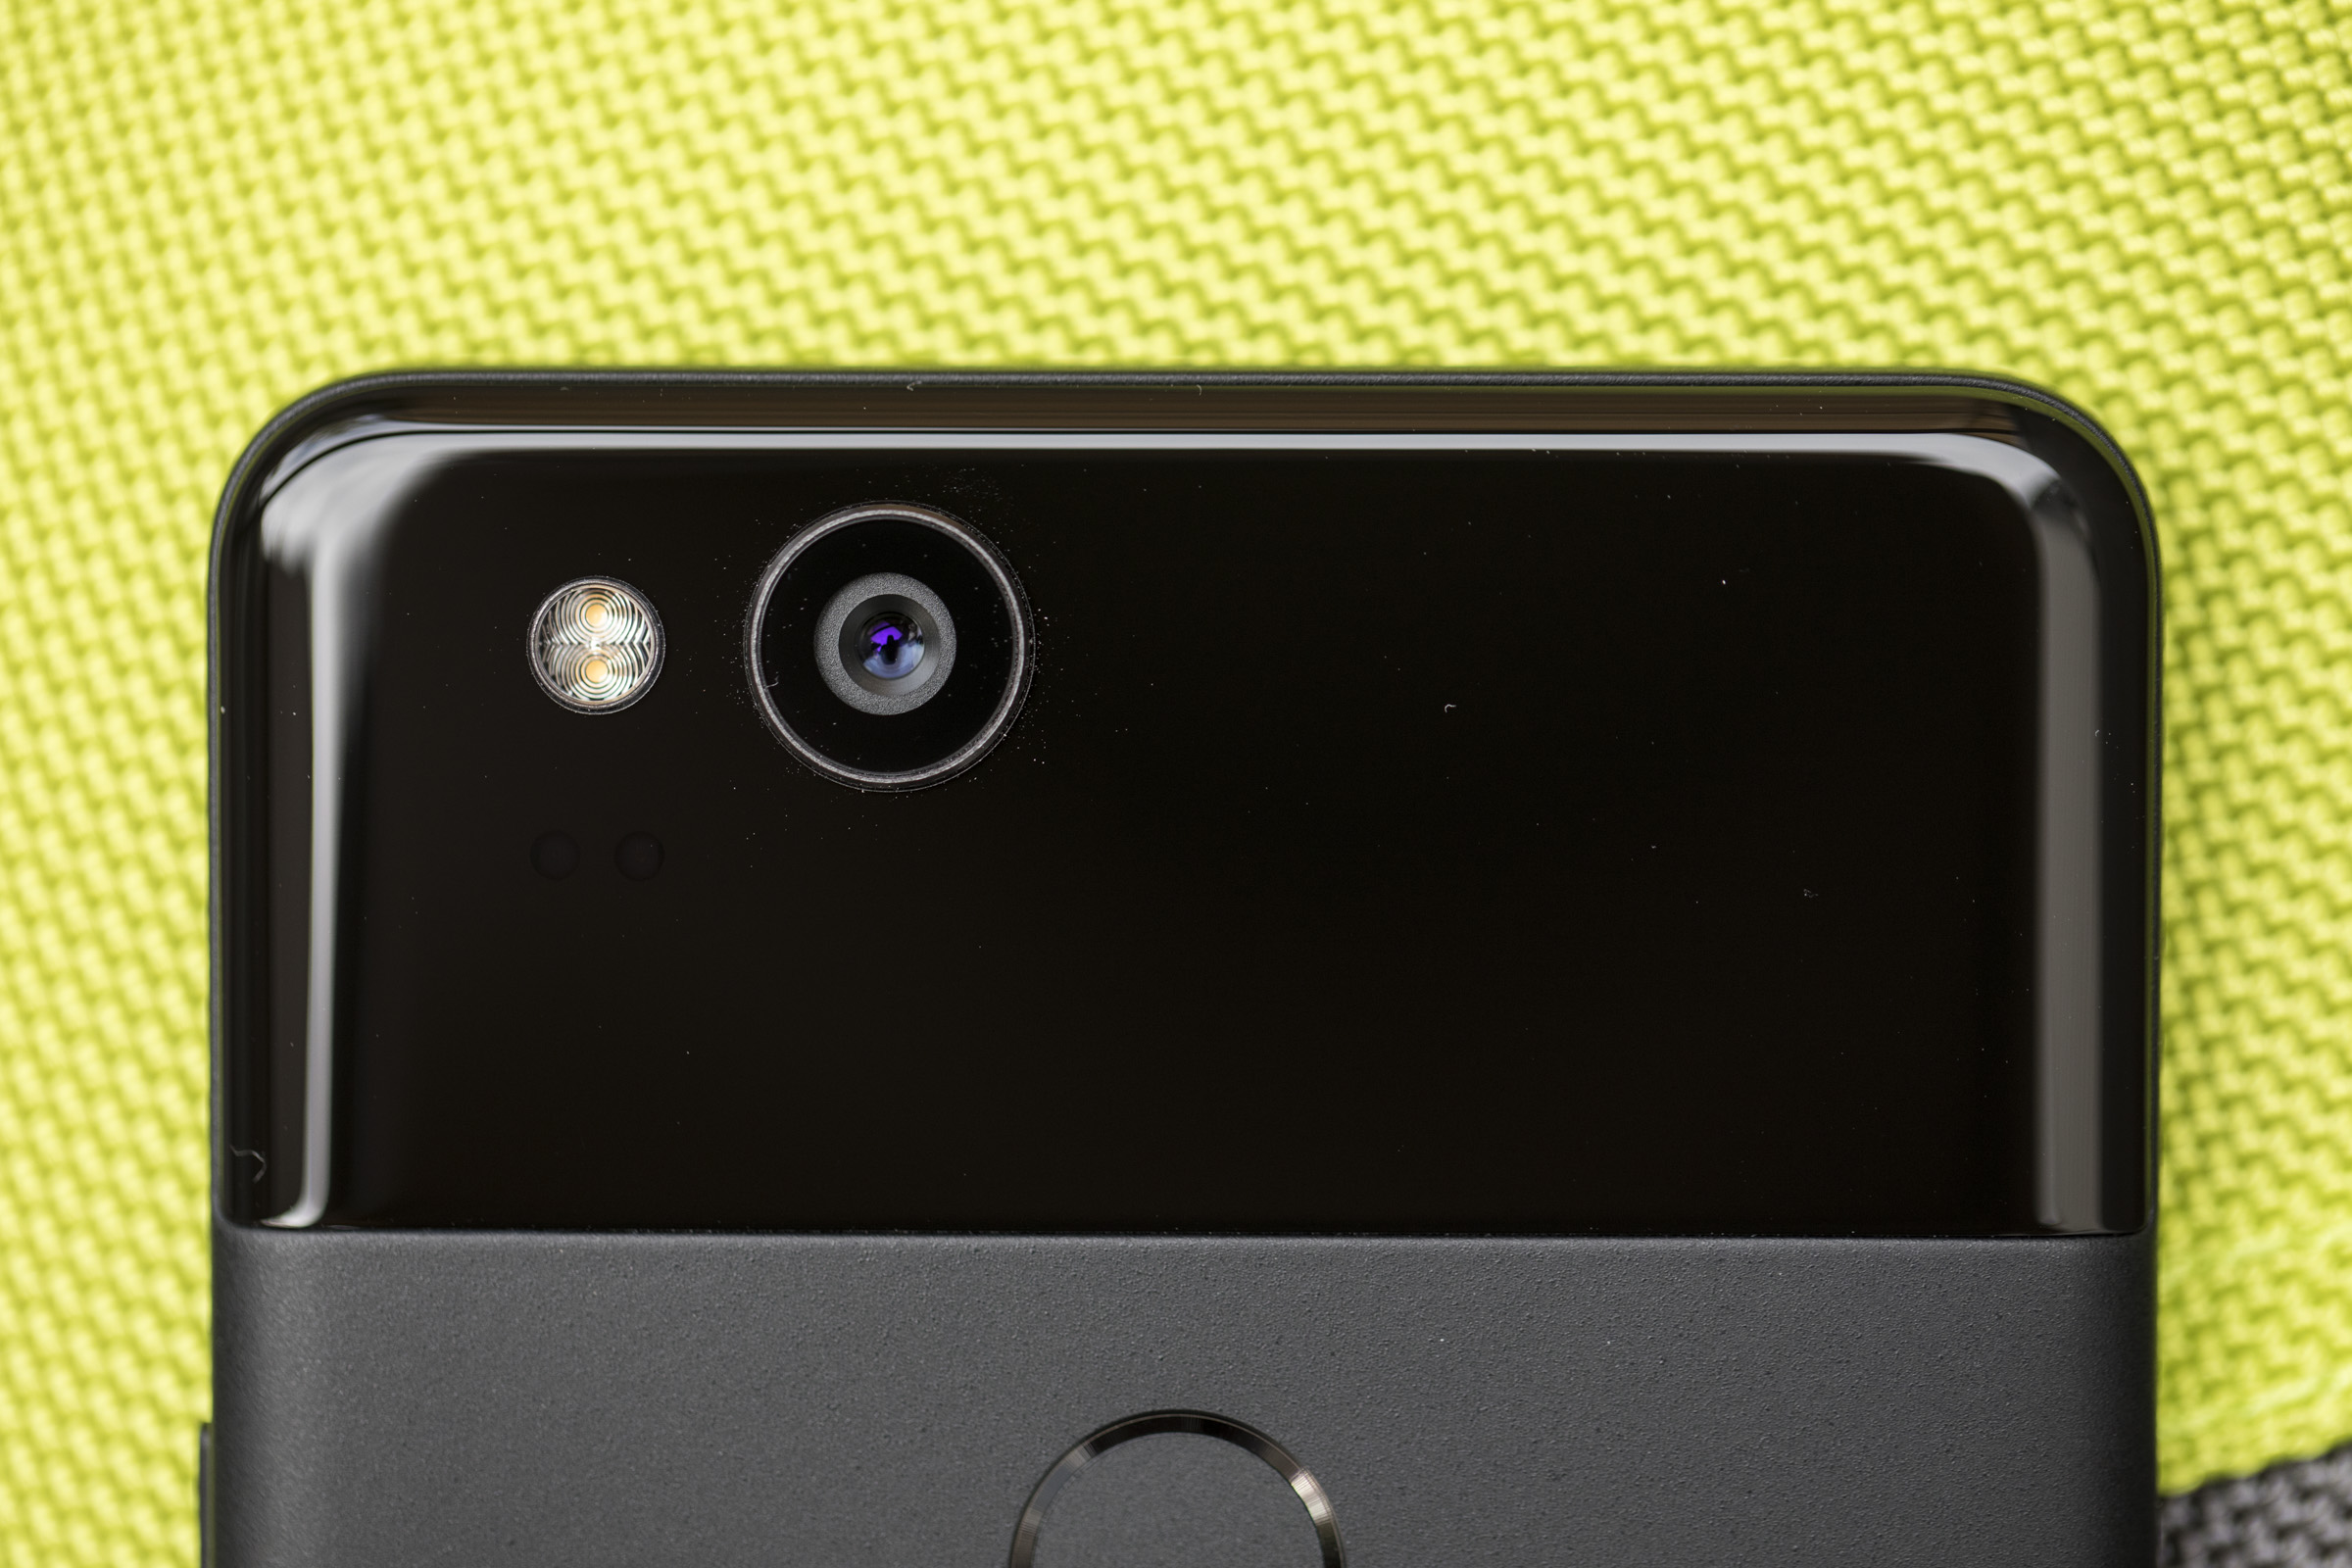 Pixel 2 and Pixel 2 XL reaffirm Google’s top spot among smartphone cameras